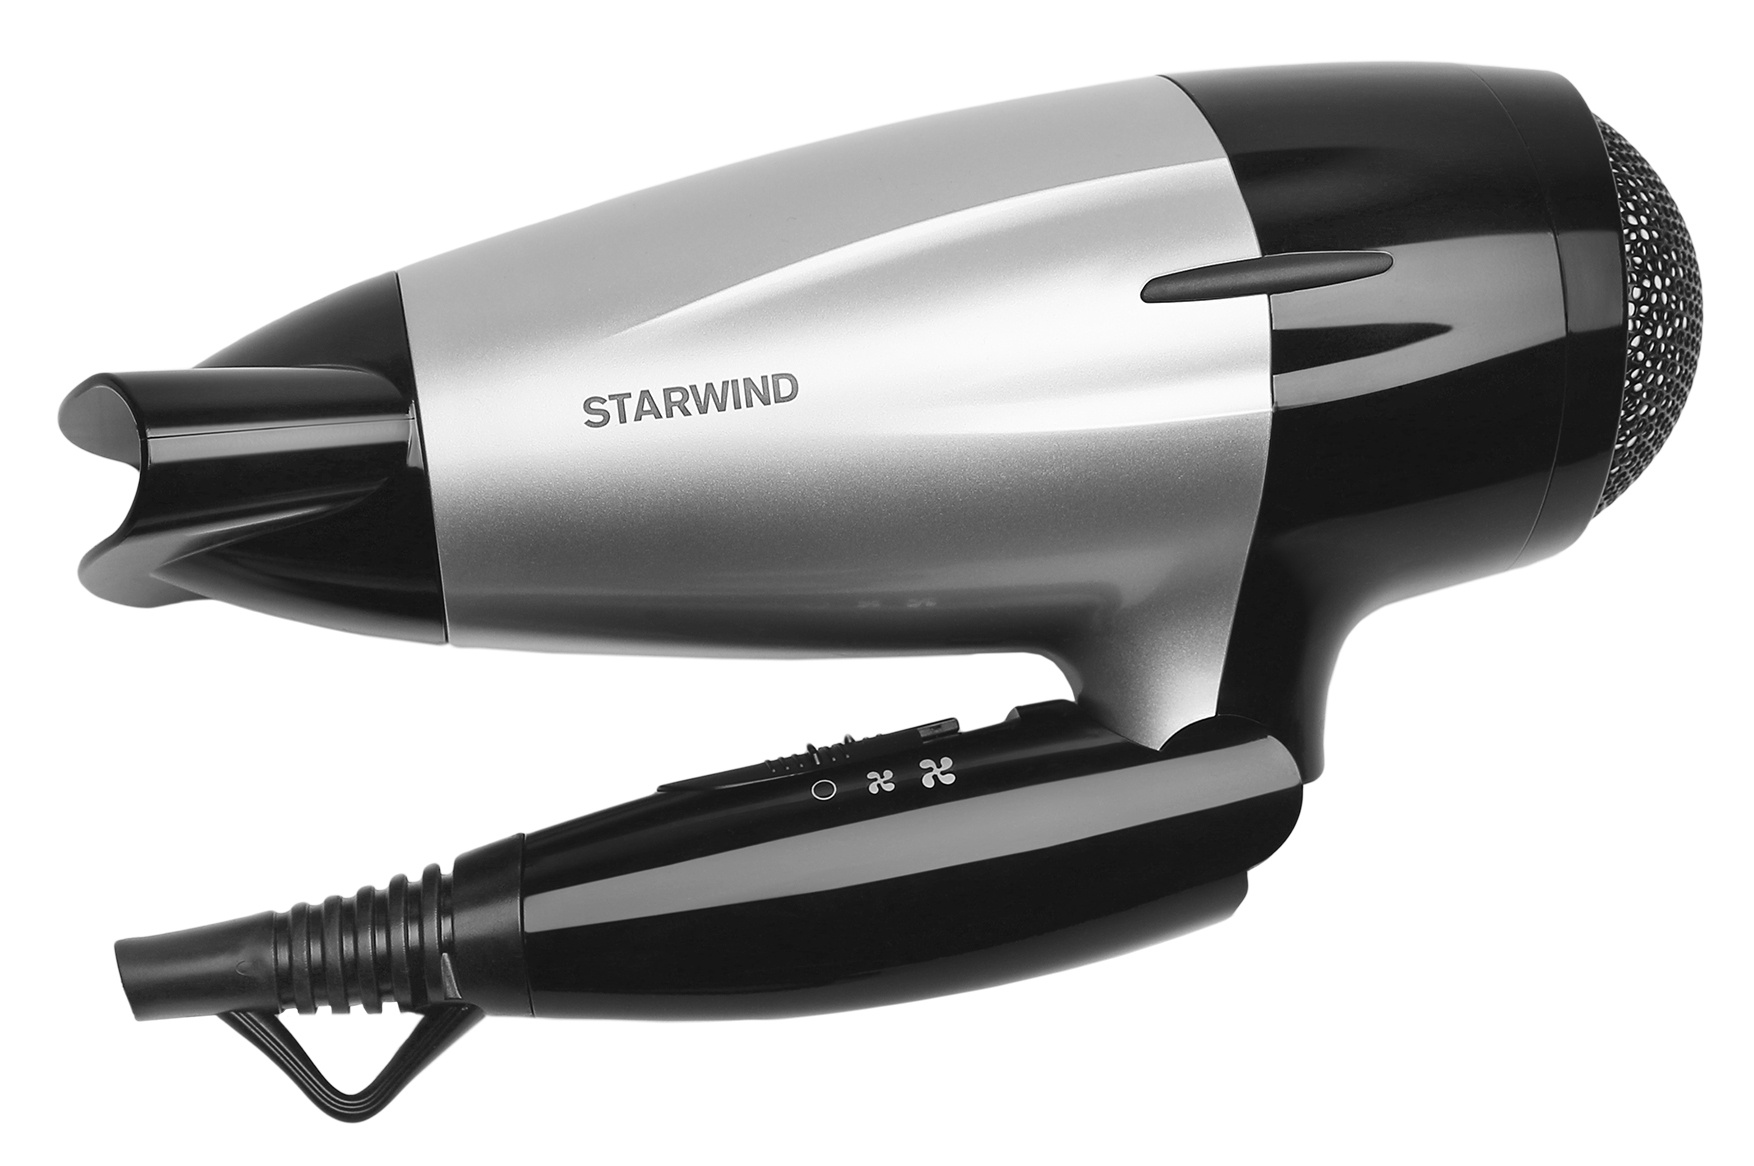 Фен Starwind SHD 6110 черный/серебристый от магазина Старвинд